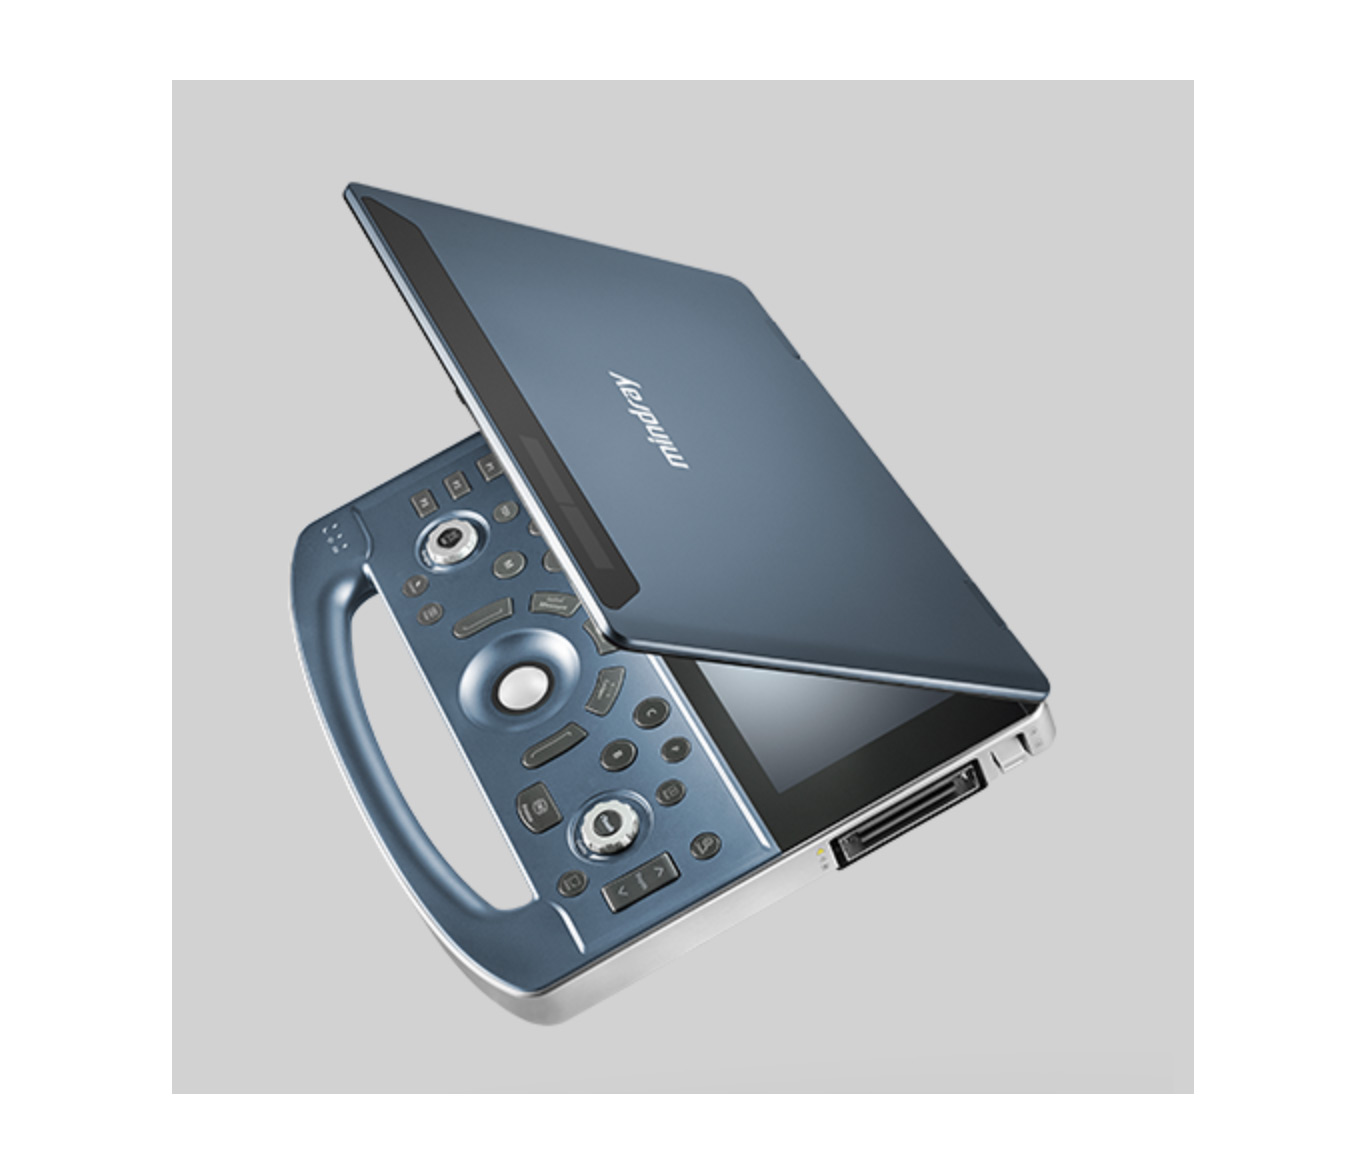 MX7 Dedicated Portable Ultrasound System